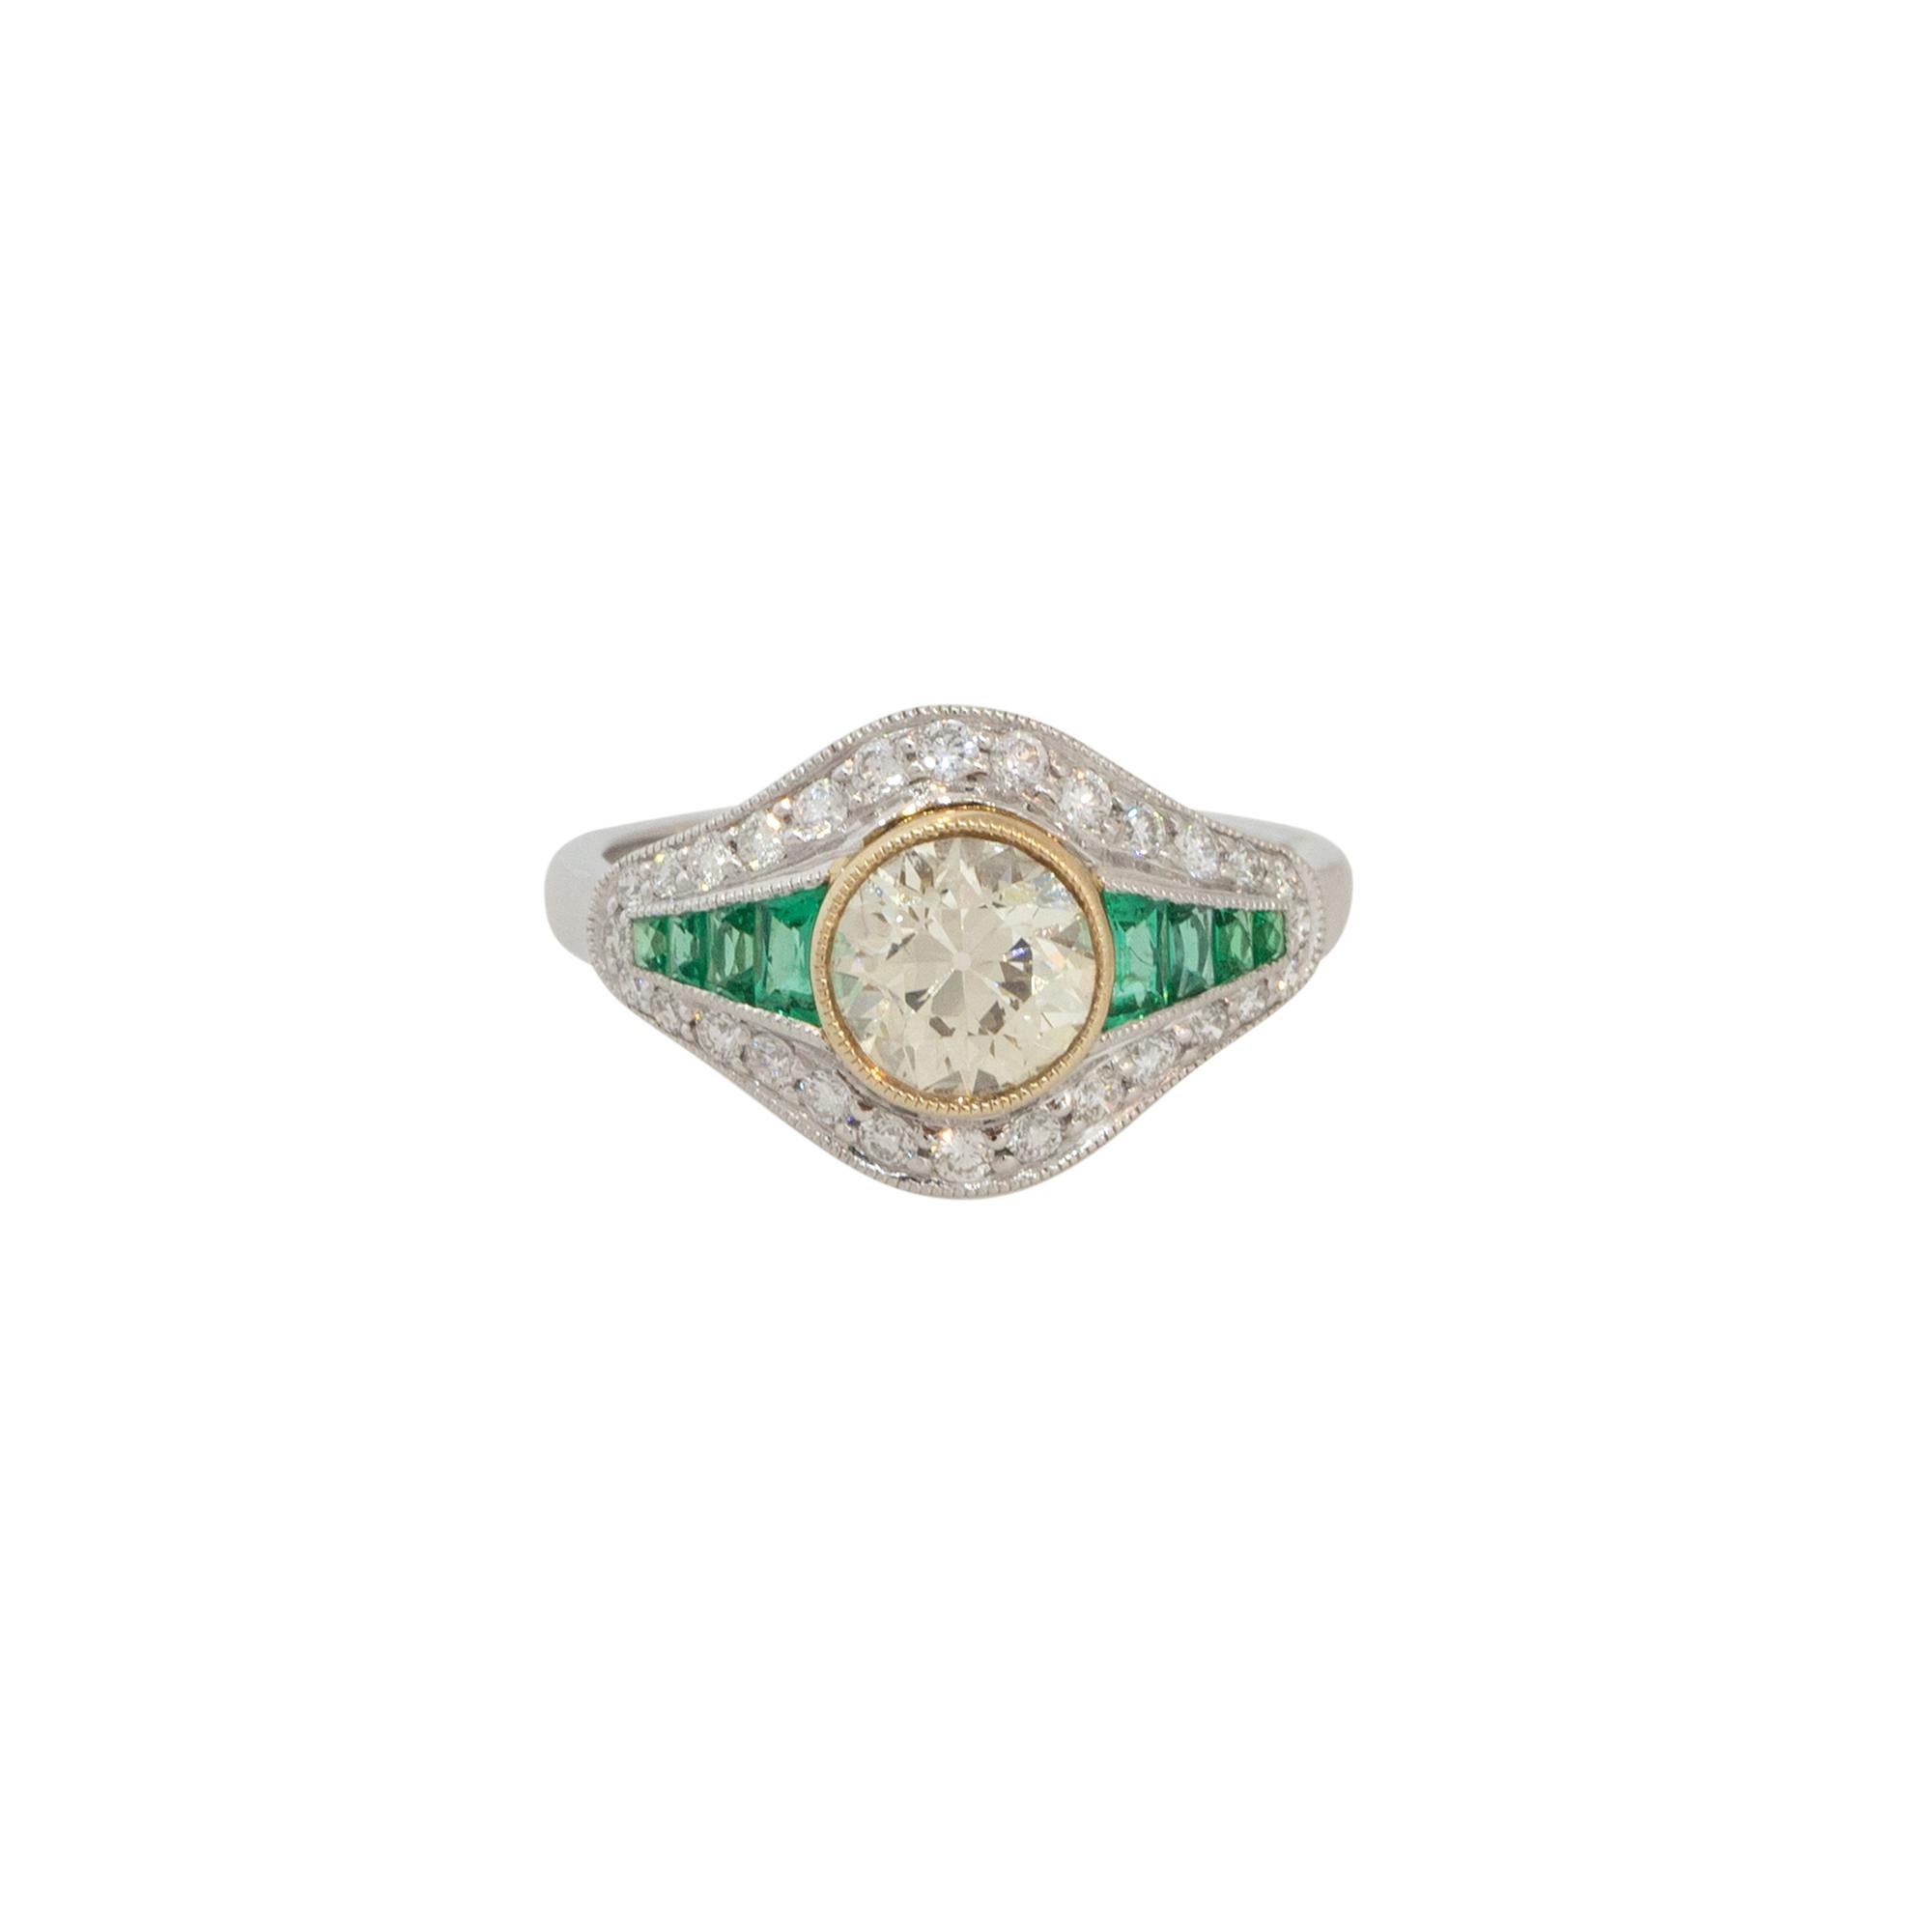 Platinum 1.46ctw Diamond and Emerald Art Deco Ring
Material: Platinum
Diamond Details: Approx. 1.46ctw of Round Brilliant Cut Diamonds. Center Diamond is L/M in color and VS2 in clarity
Gemstone Details: Approx. 0.24ctw of Baguette Cut Emeralds
Ring